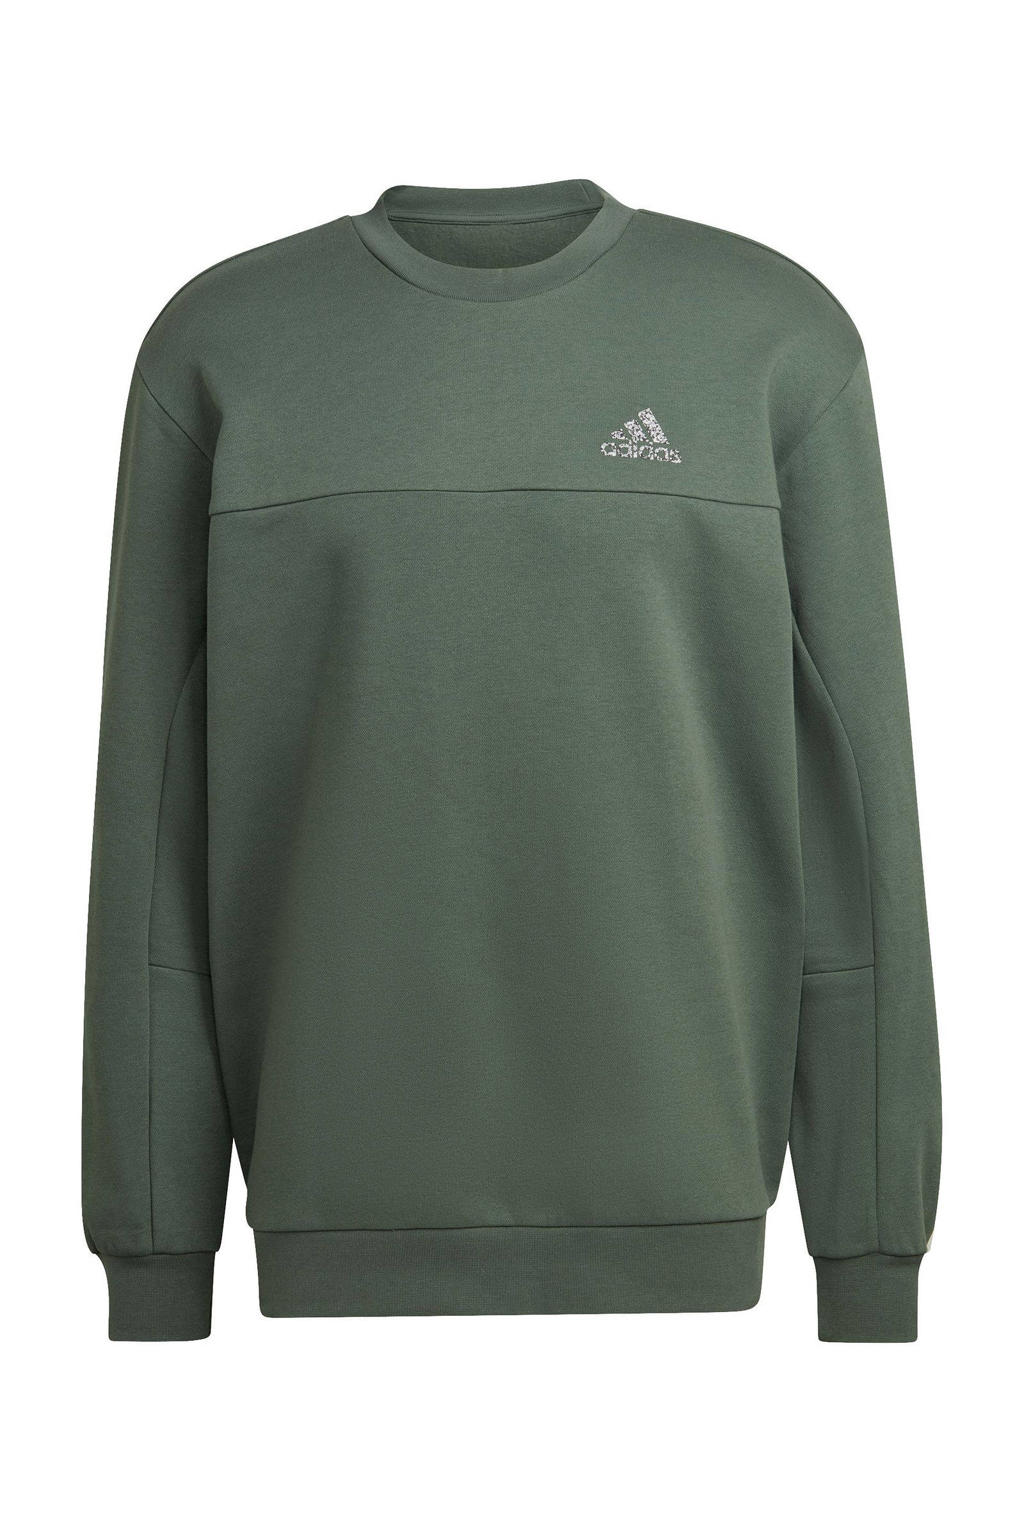 adidas Performance   fleece sportsweater groen